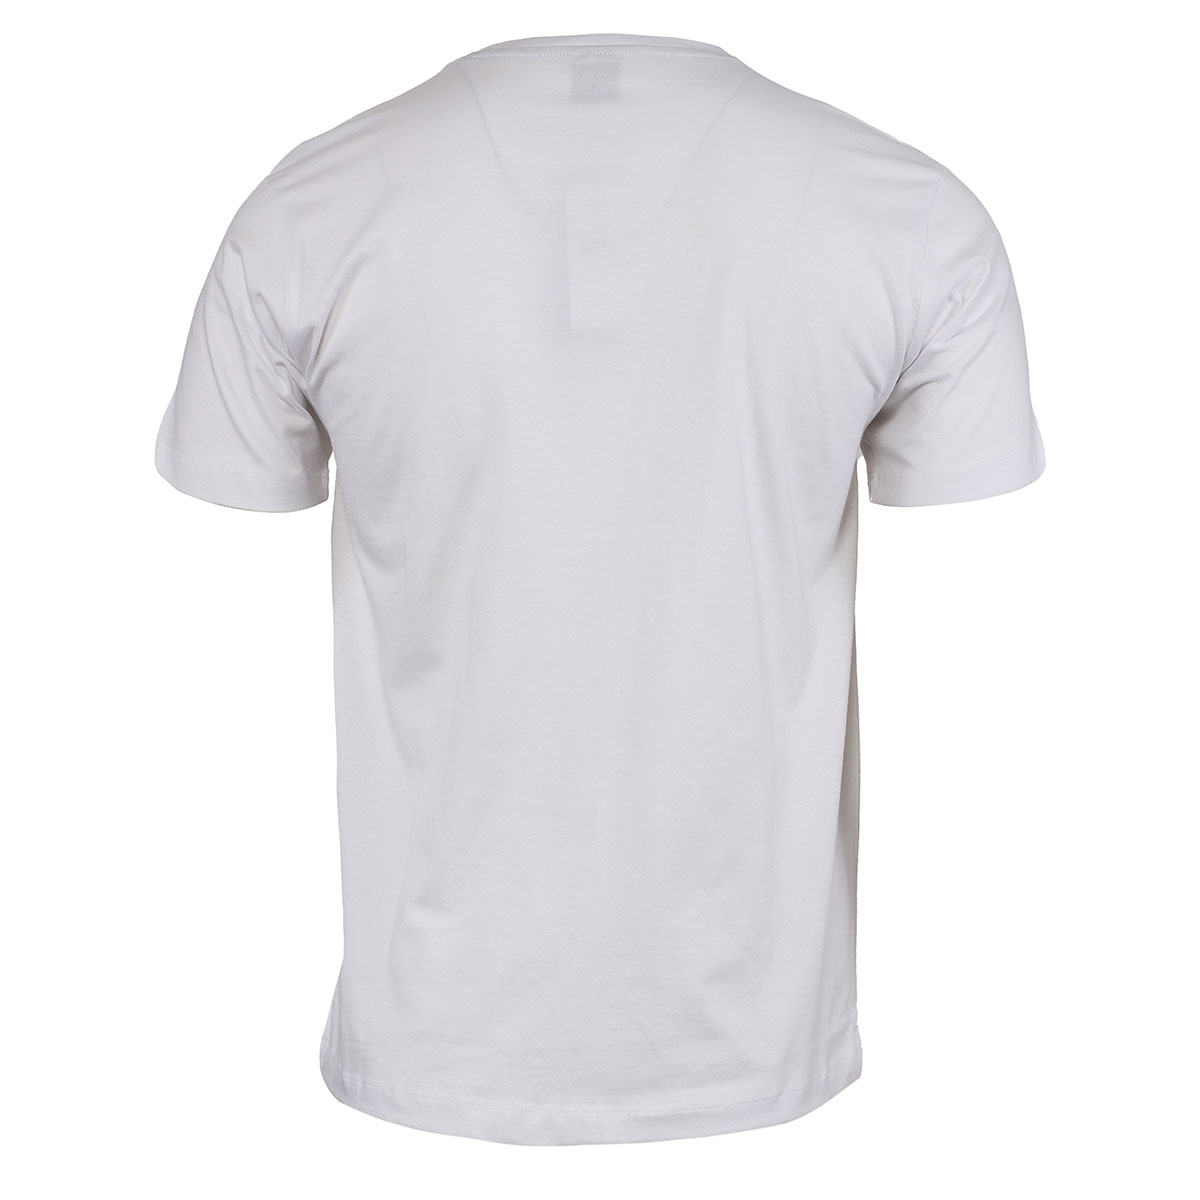 U.S. Polo Assn. Men's V-Neck T-Shirt - image 3 of 3